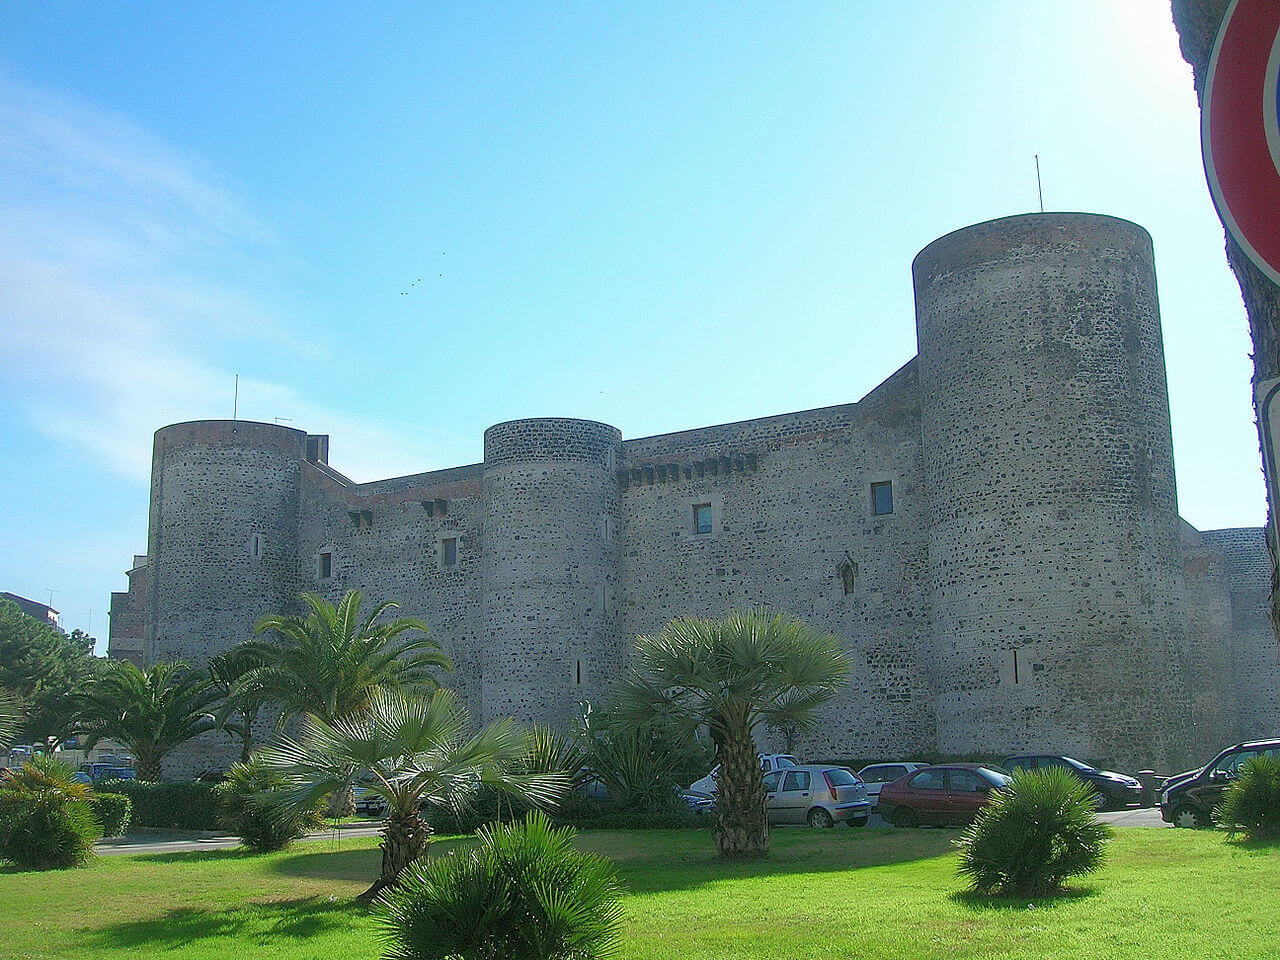 Castello Ursino in Catania, Sicily